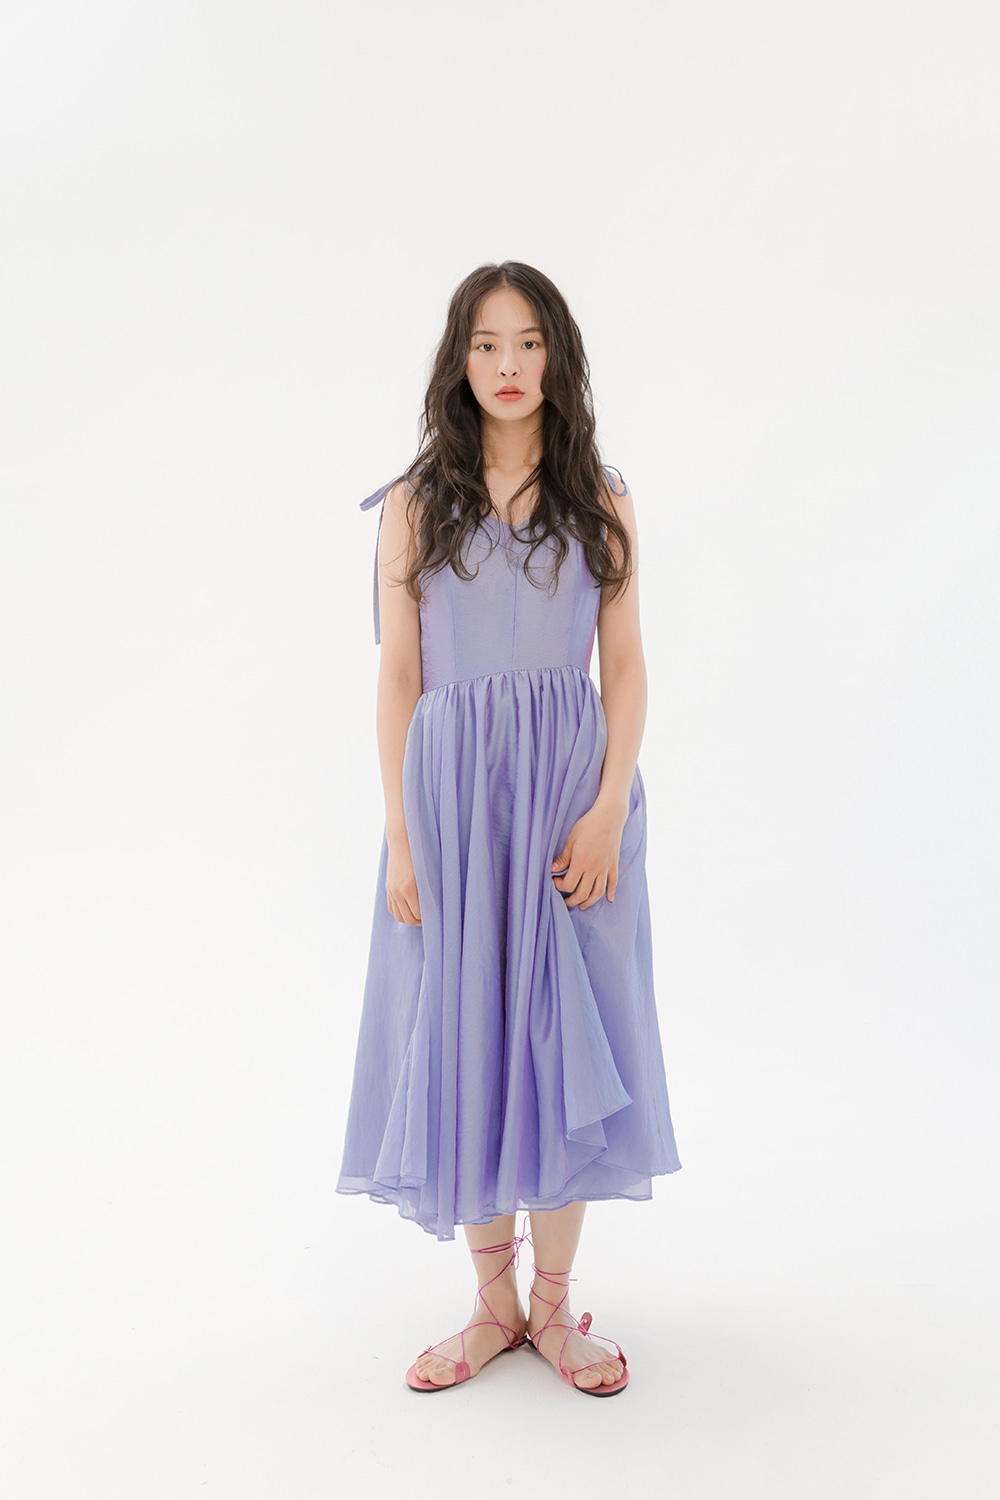 Fairy Dress (aurora purple)